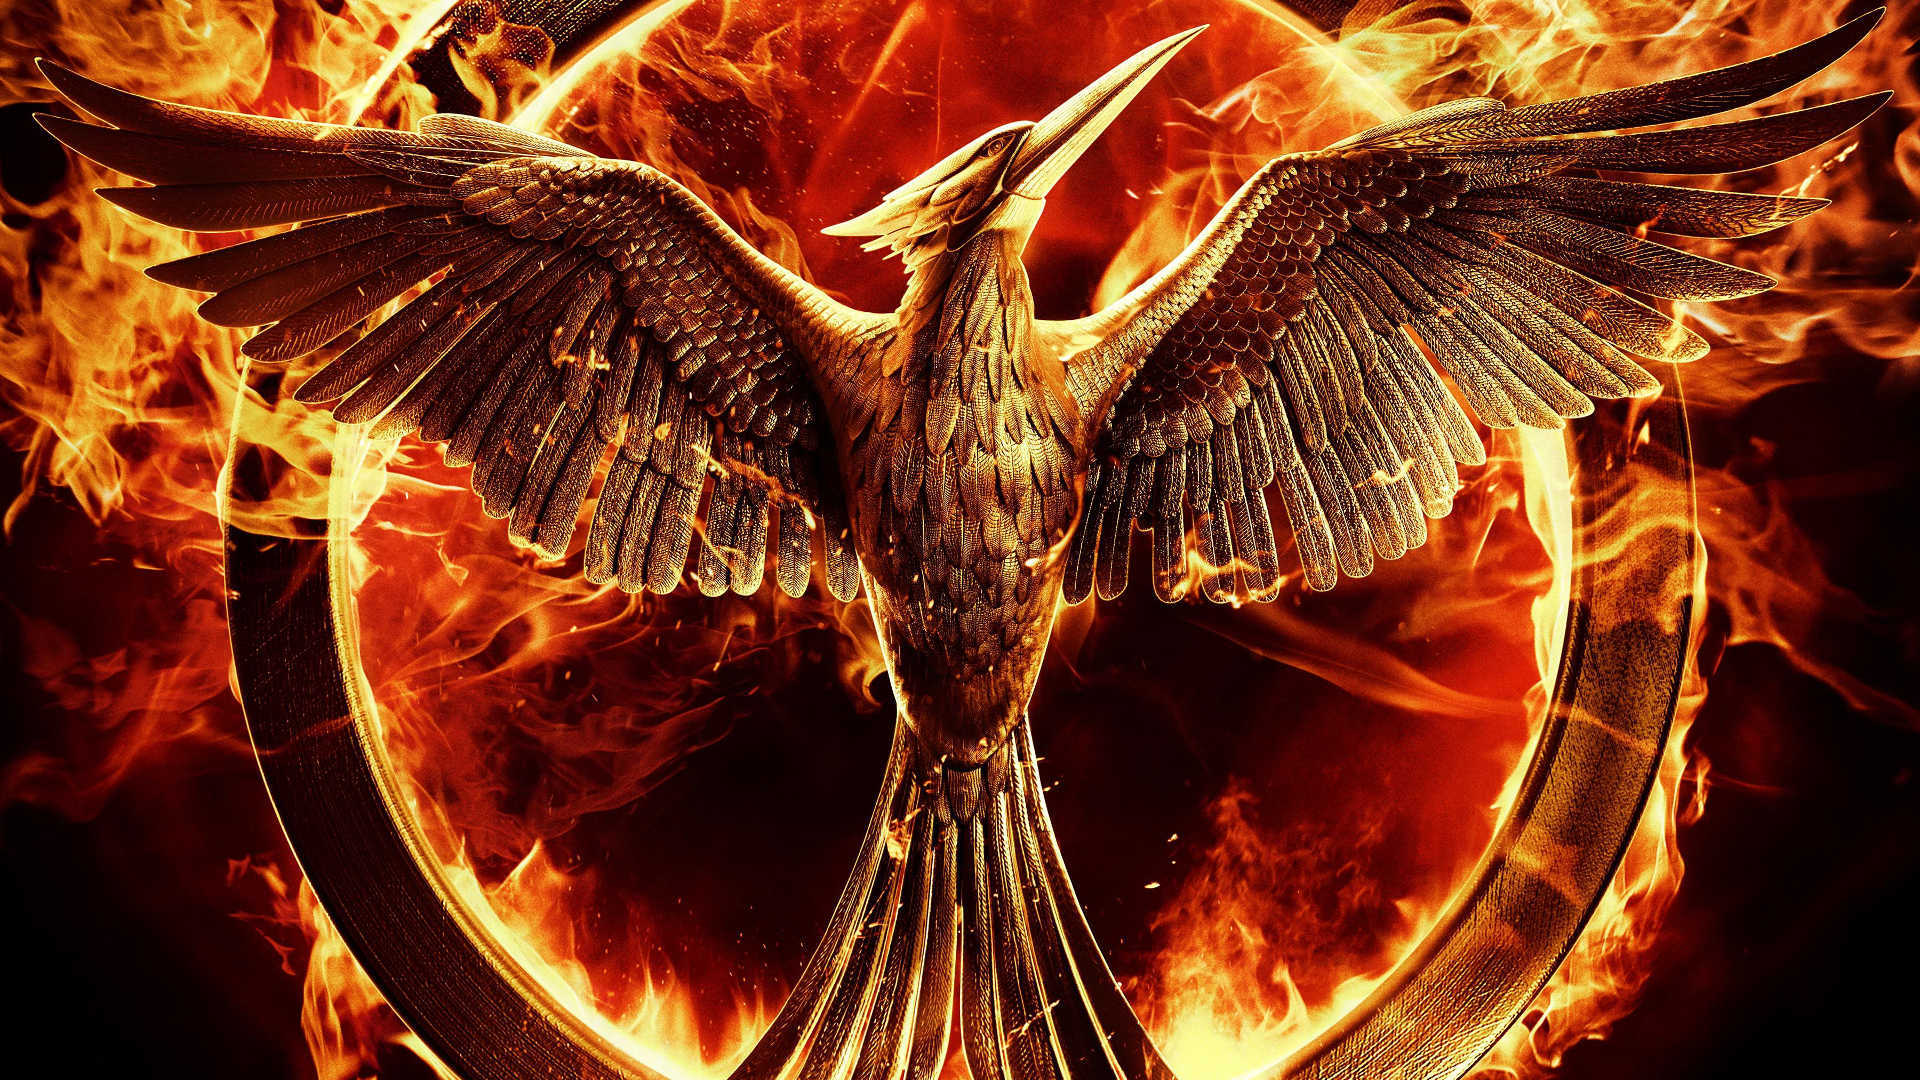  The Hunger Games Mockingjay Part 1 Wallpapers HD 02 hdwallwidecom